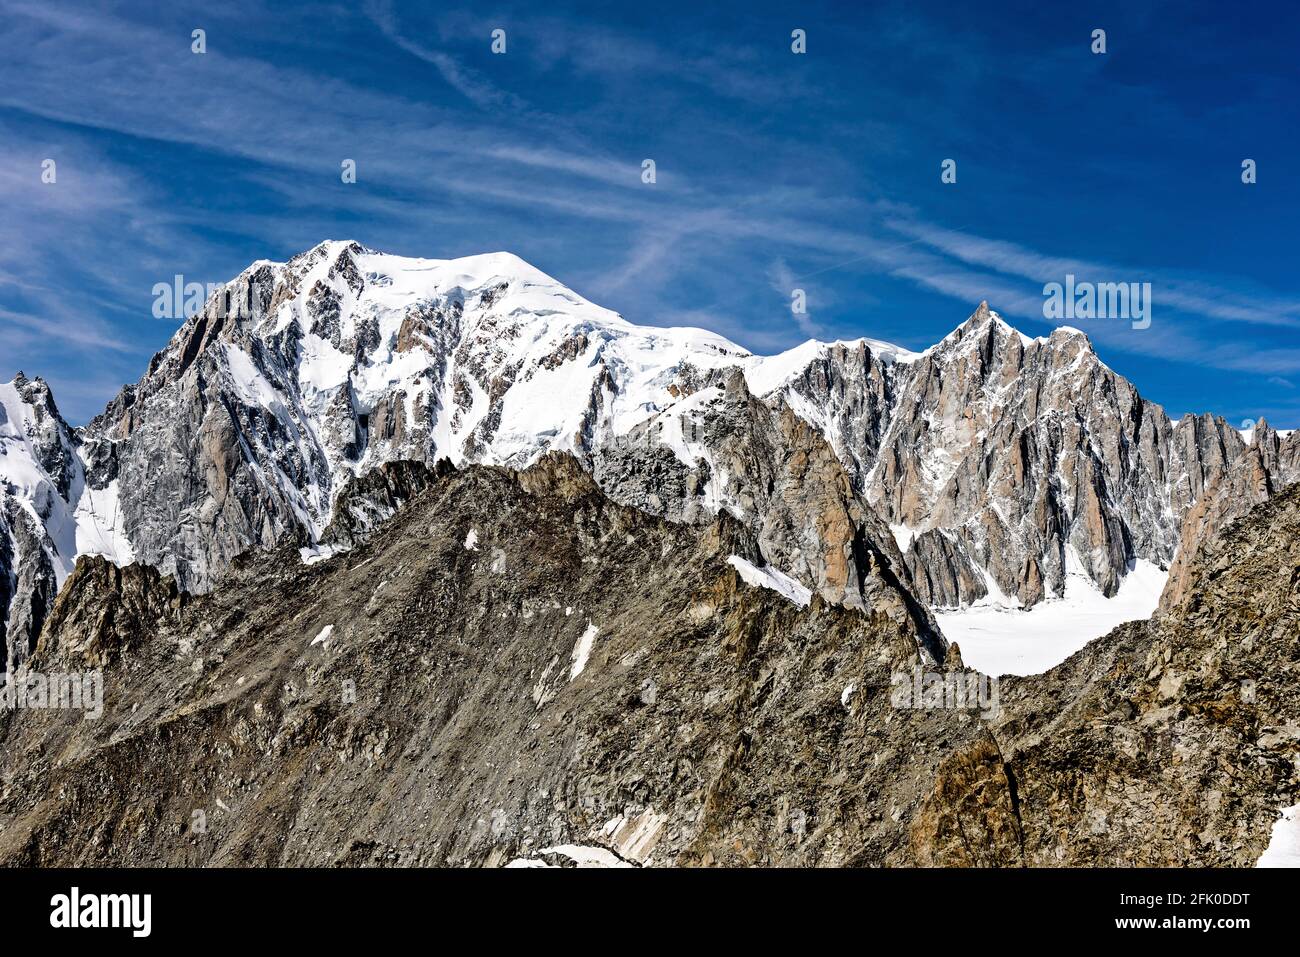 Monte Bianco mountain, Pointe Helbronner, it.Punta Helbronner peak, mt3466, Alps, Valle d'Aosta, Italy, Europe Stock Photo